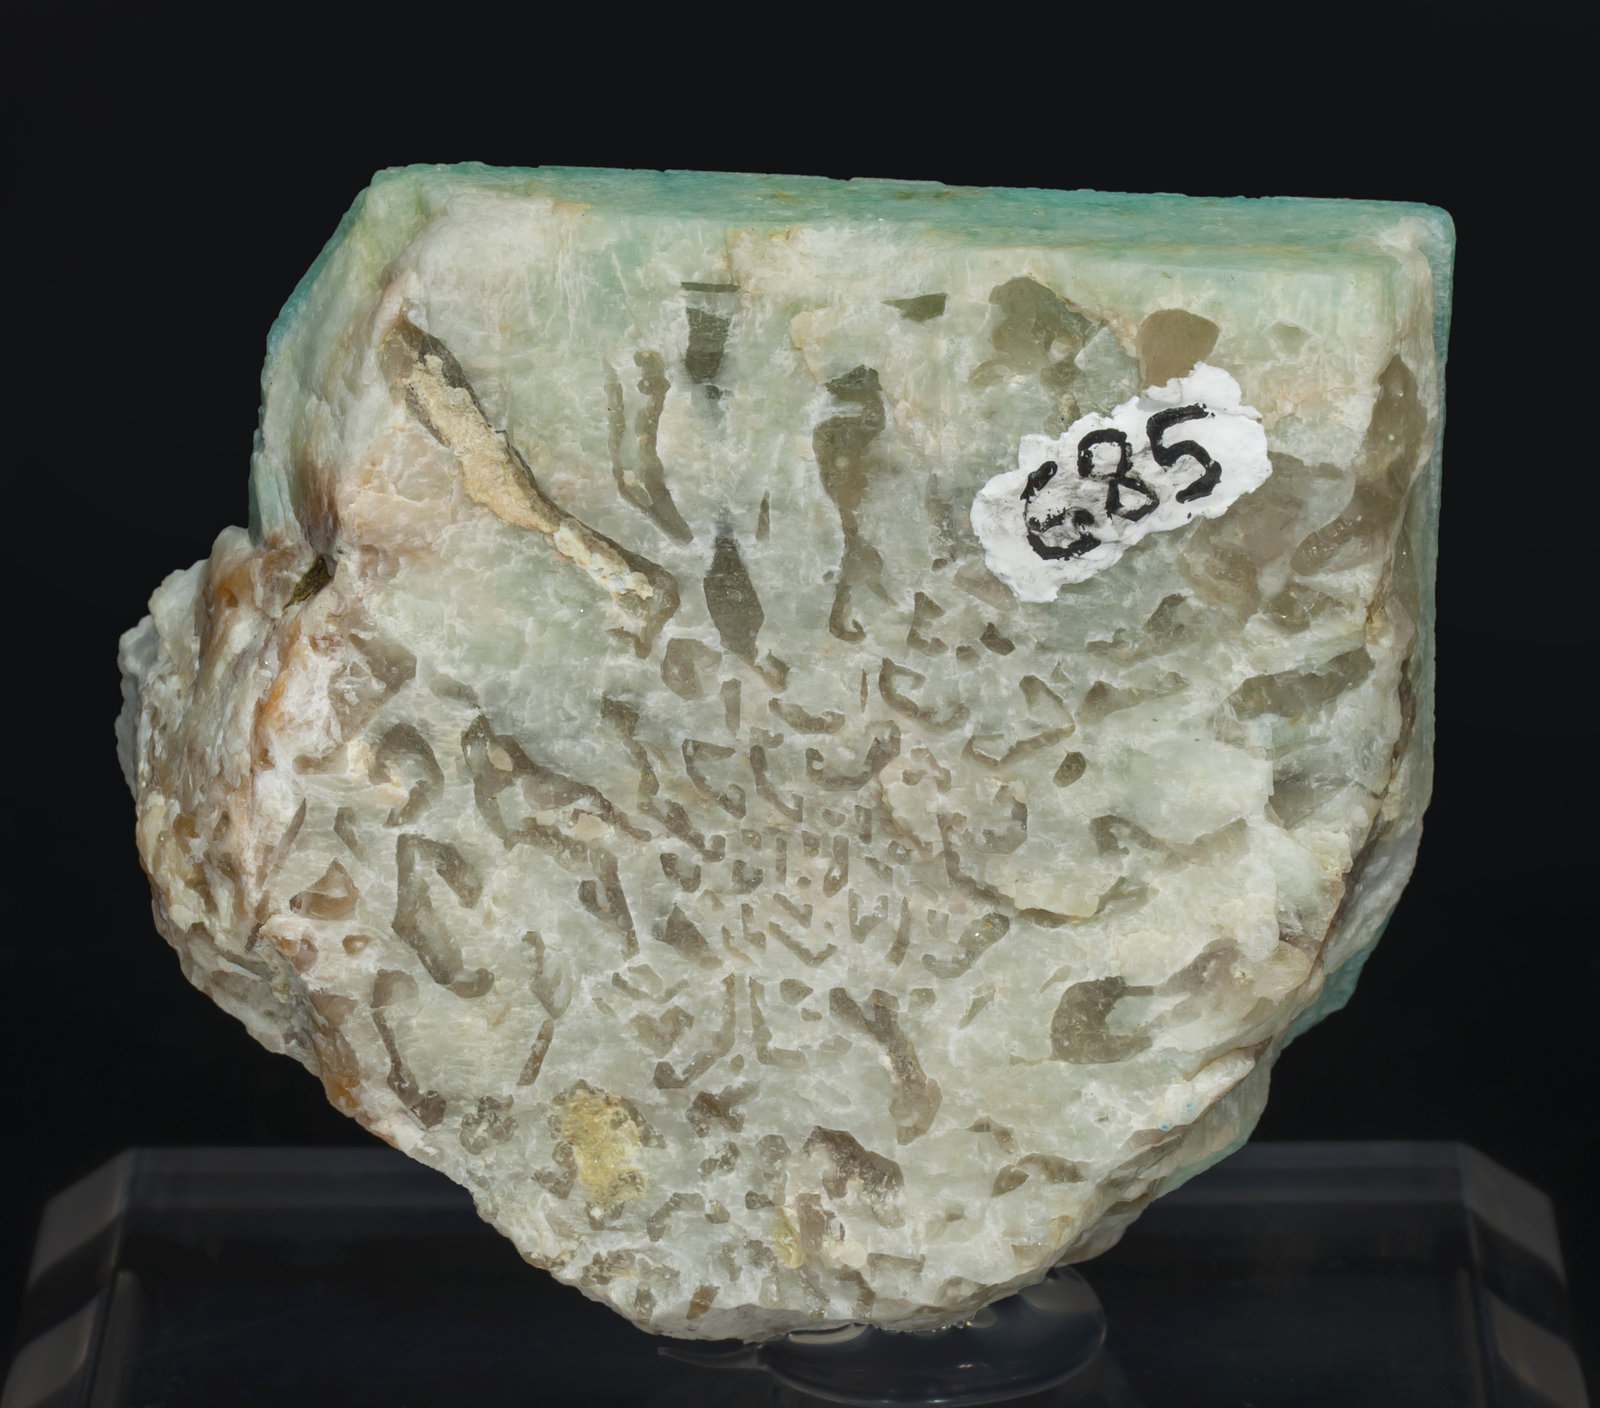 specimens/s_imagesAI4/Microcline_amazonite-MF46AI4r.jpg